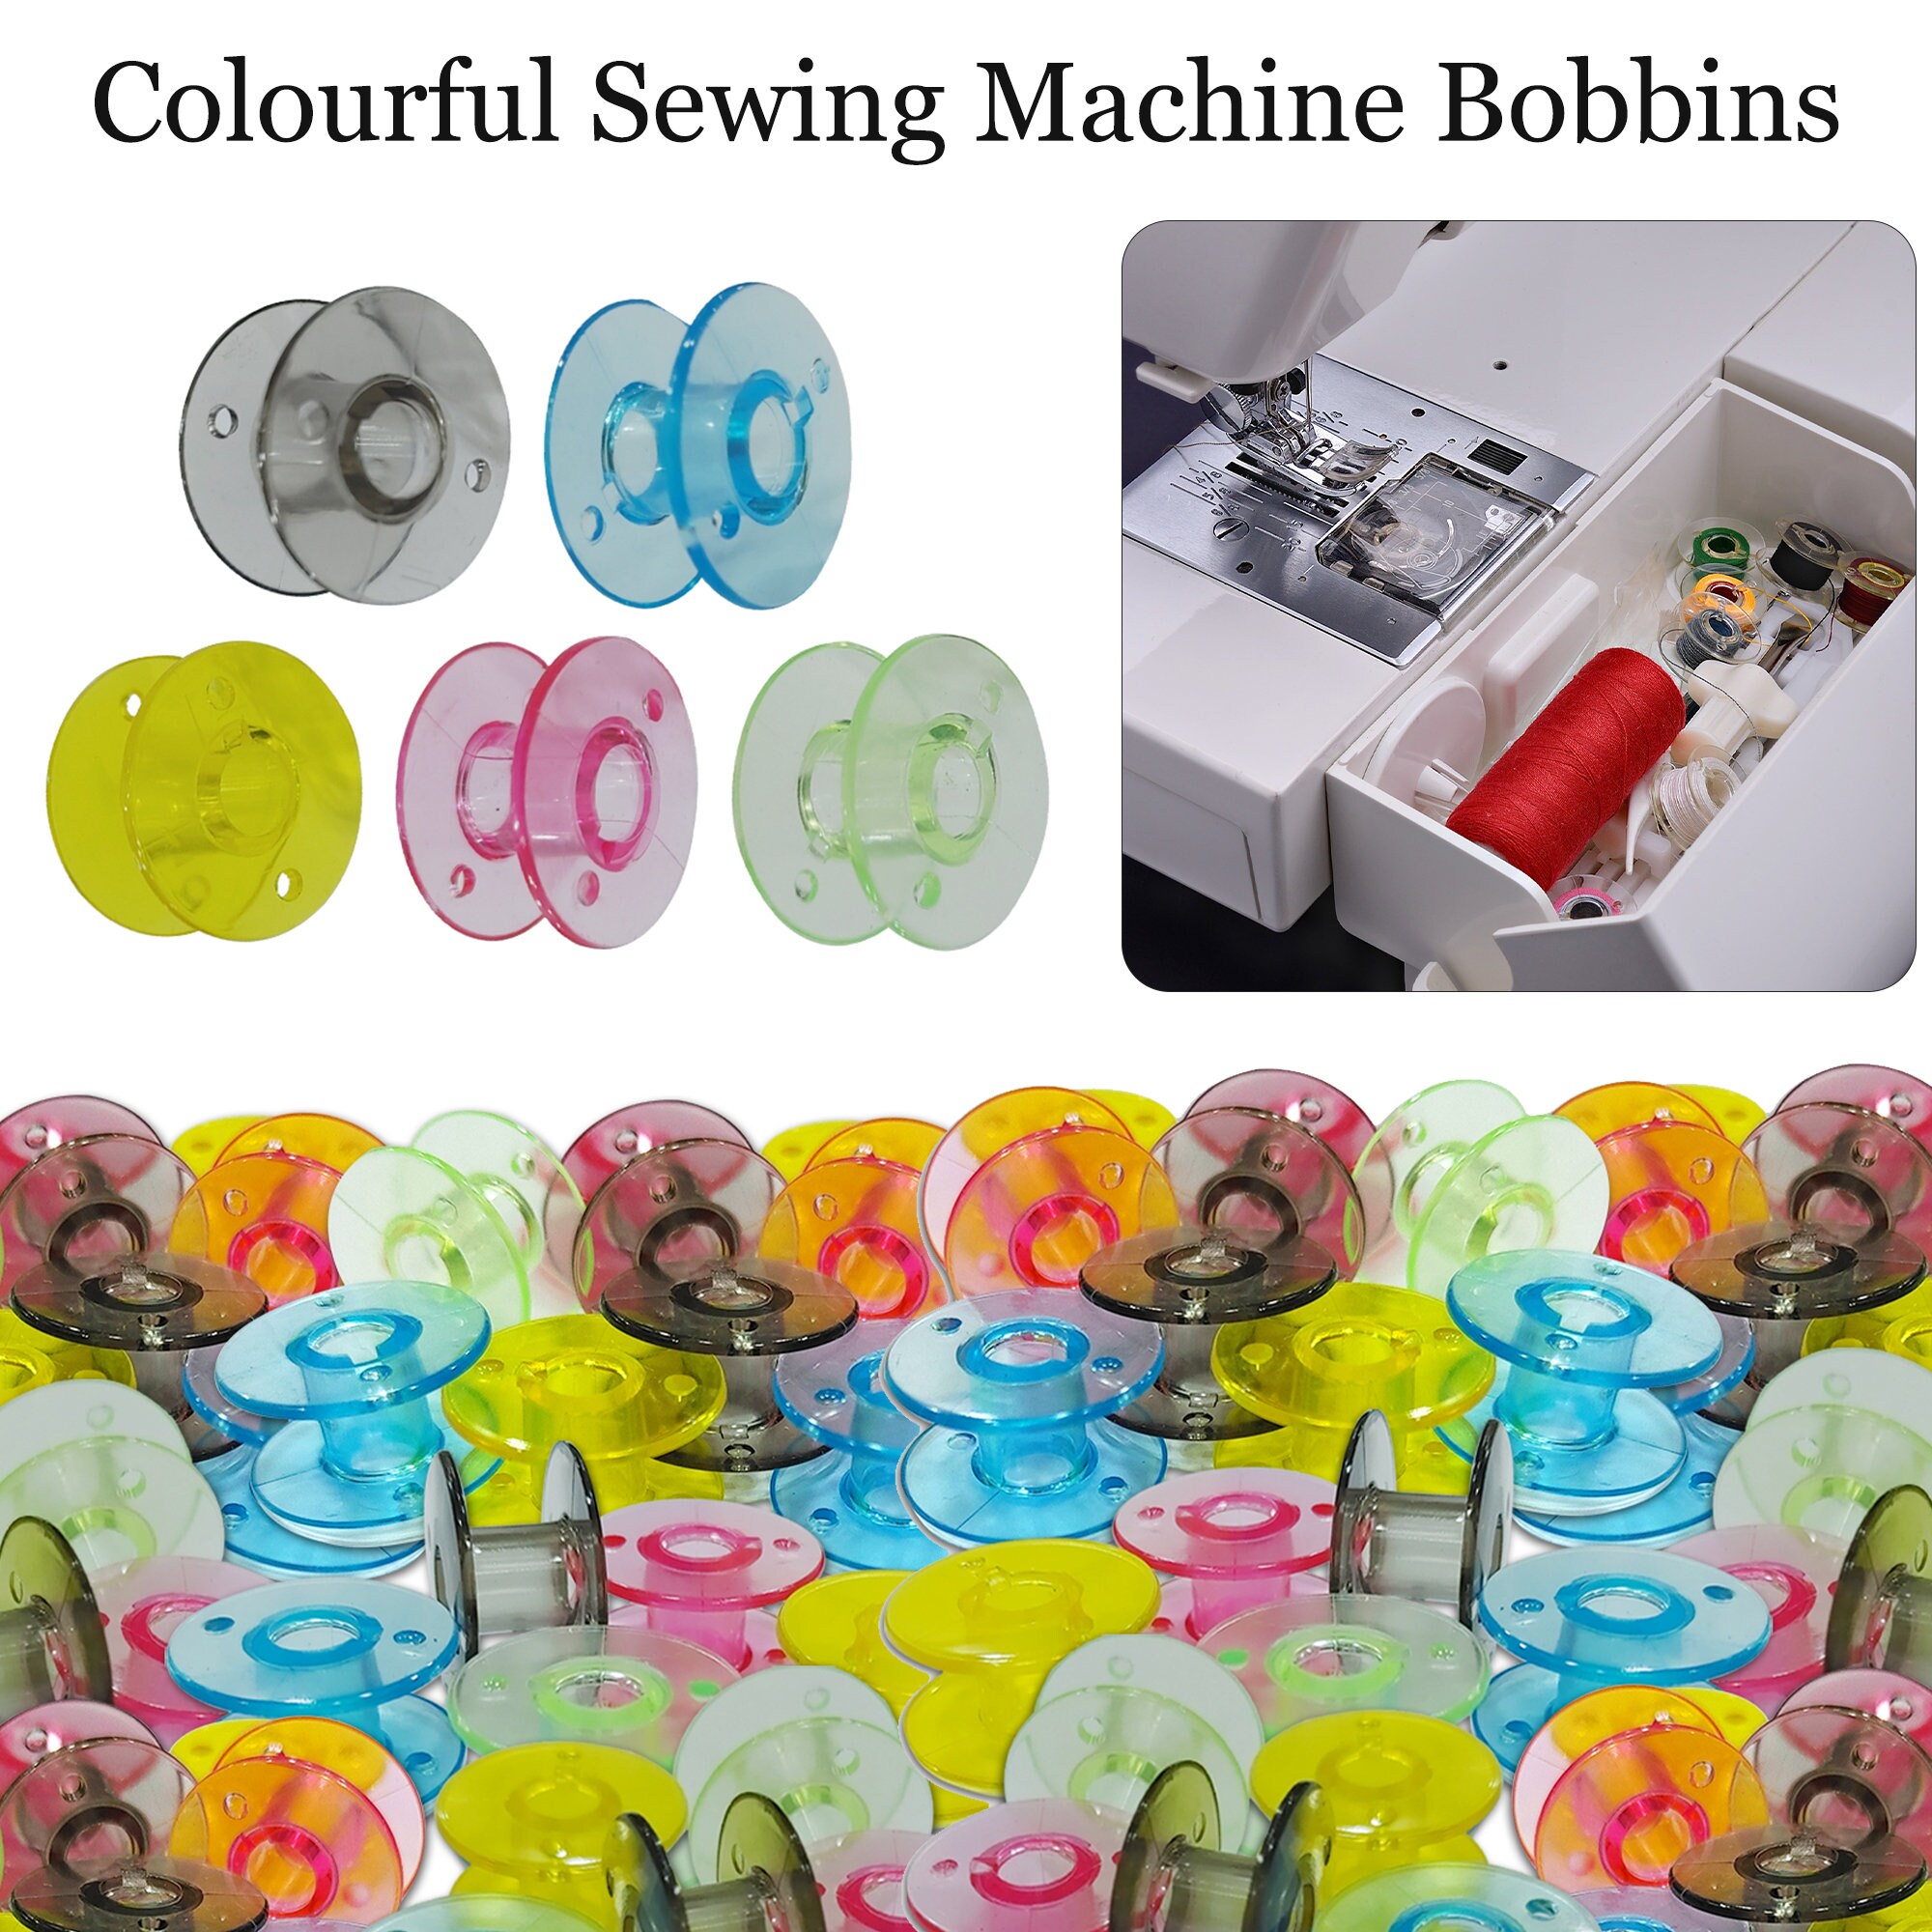 Kenmore 1216, 1219 & 1221 Sewing Machine Instruction Manual PDF Download